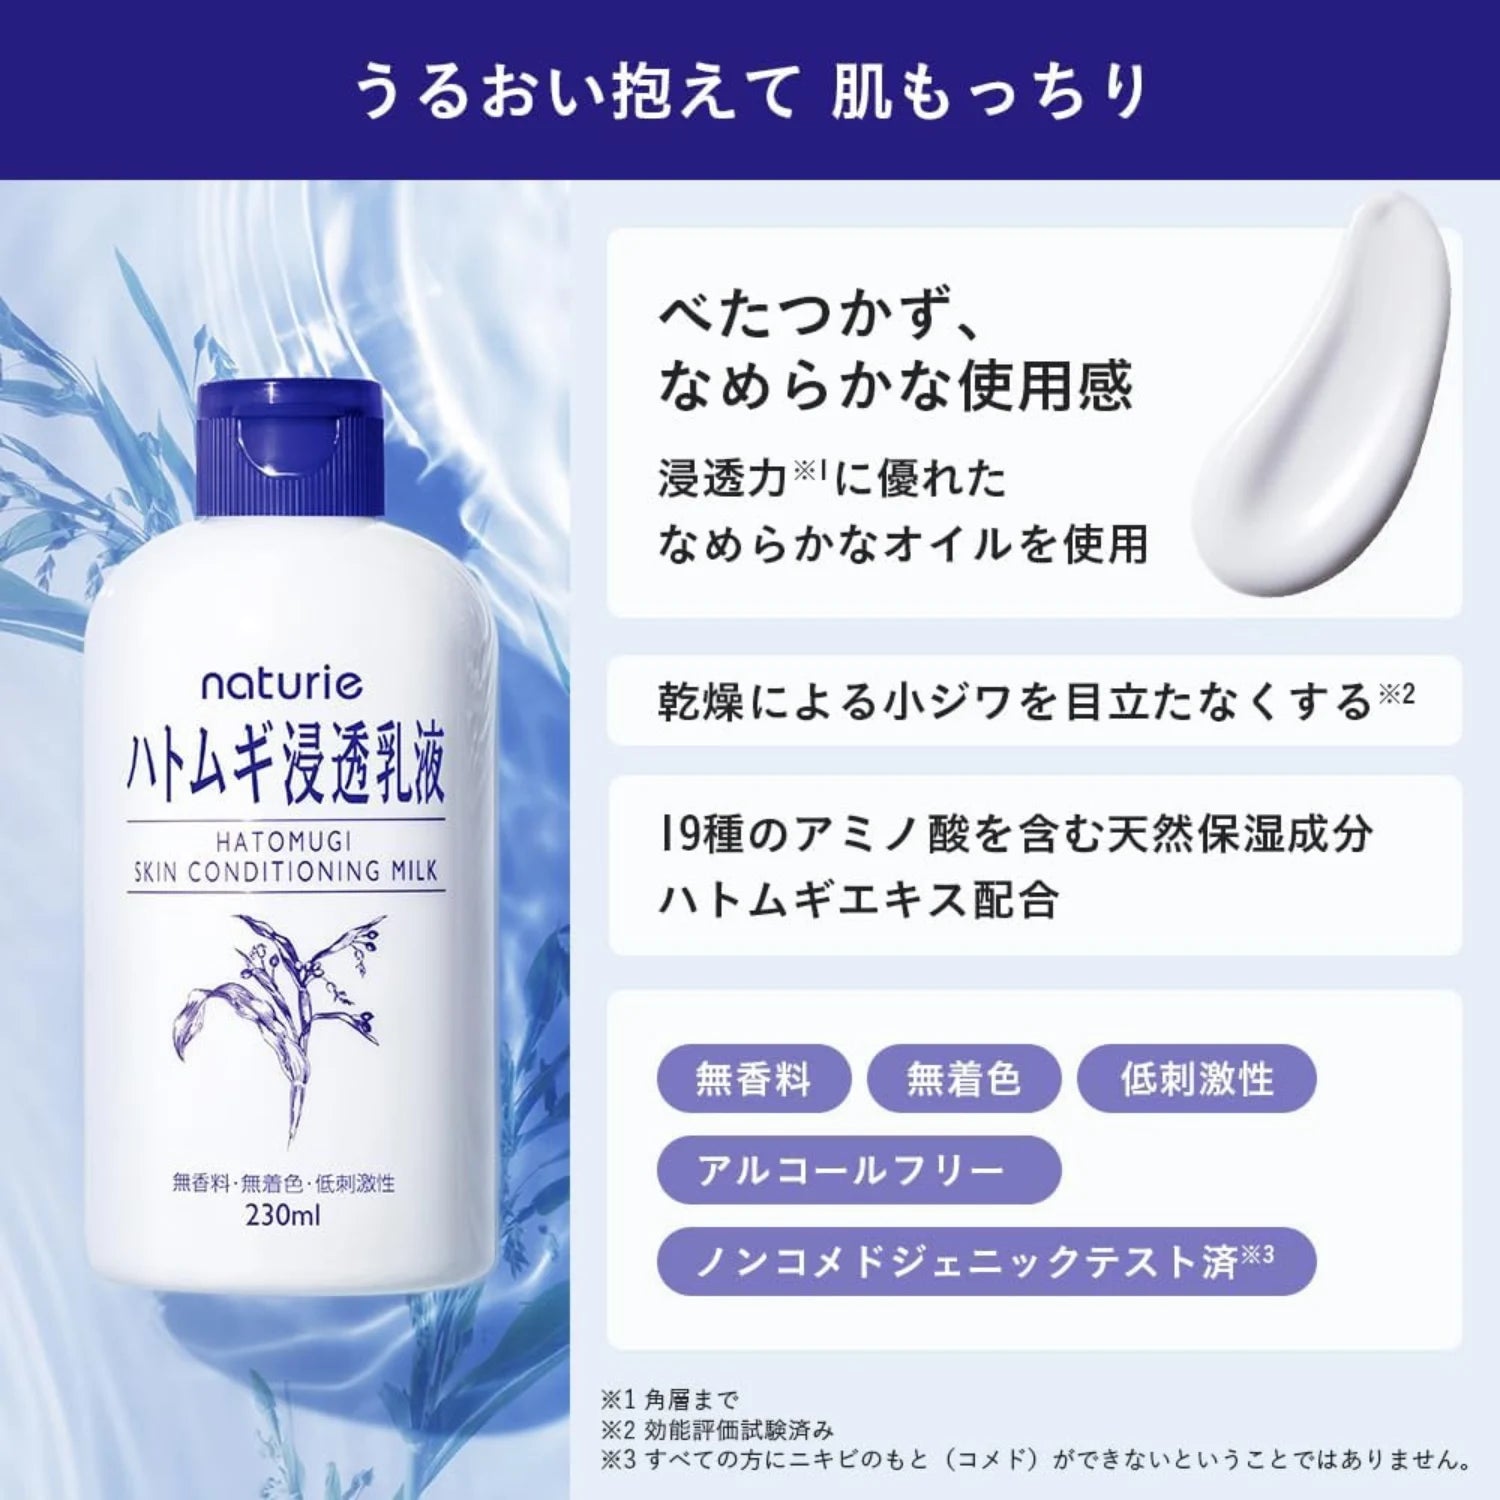 Naturie Hatomugi Skin Conditioner Milky Lotion 230ml - Buy Me Japan